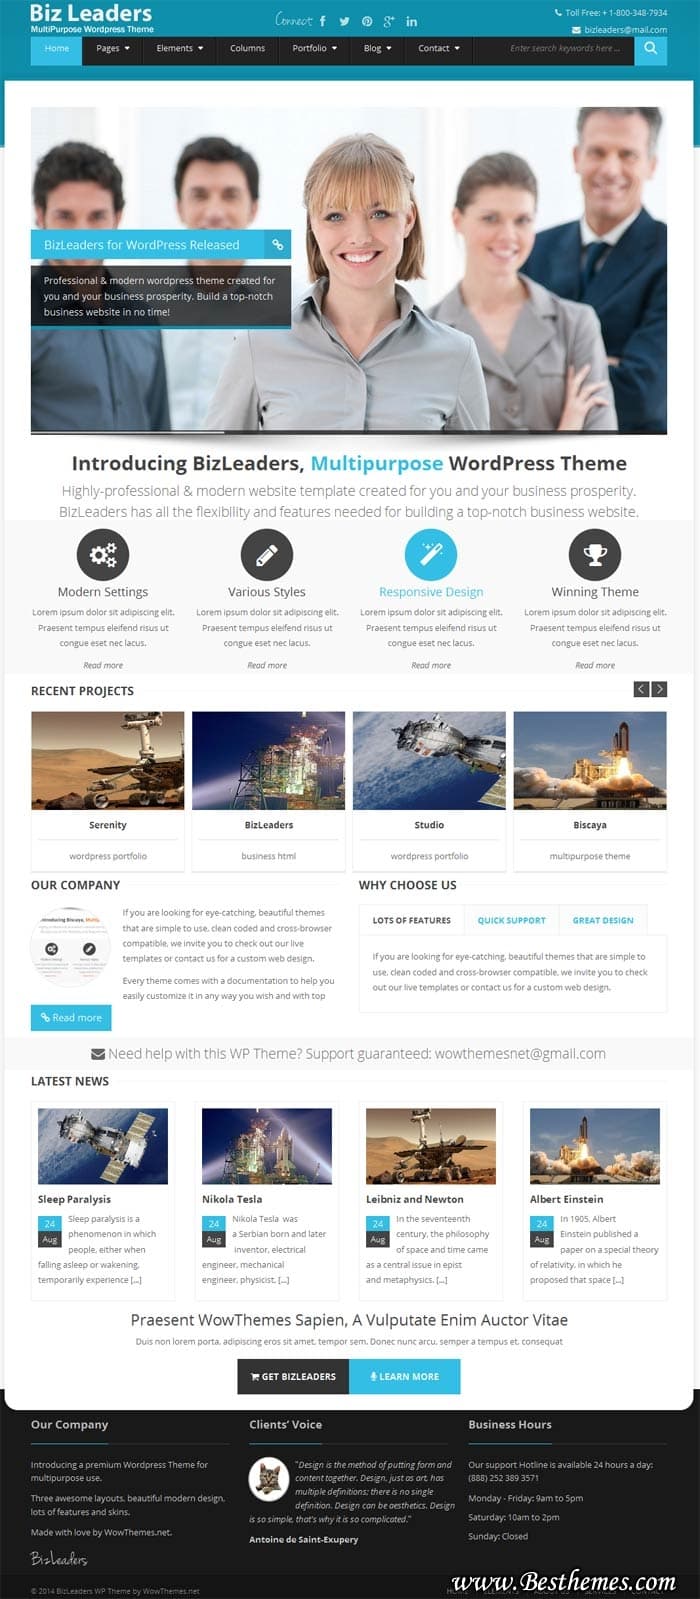 BizLeaders WordPress Theme - WOW Themes